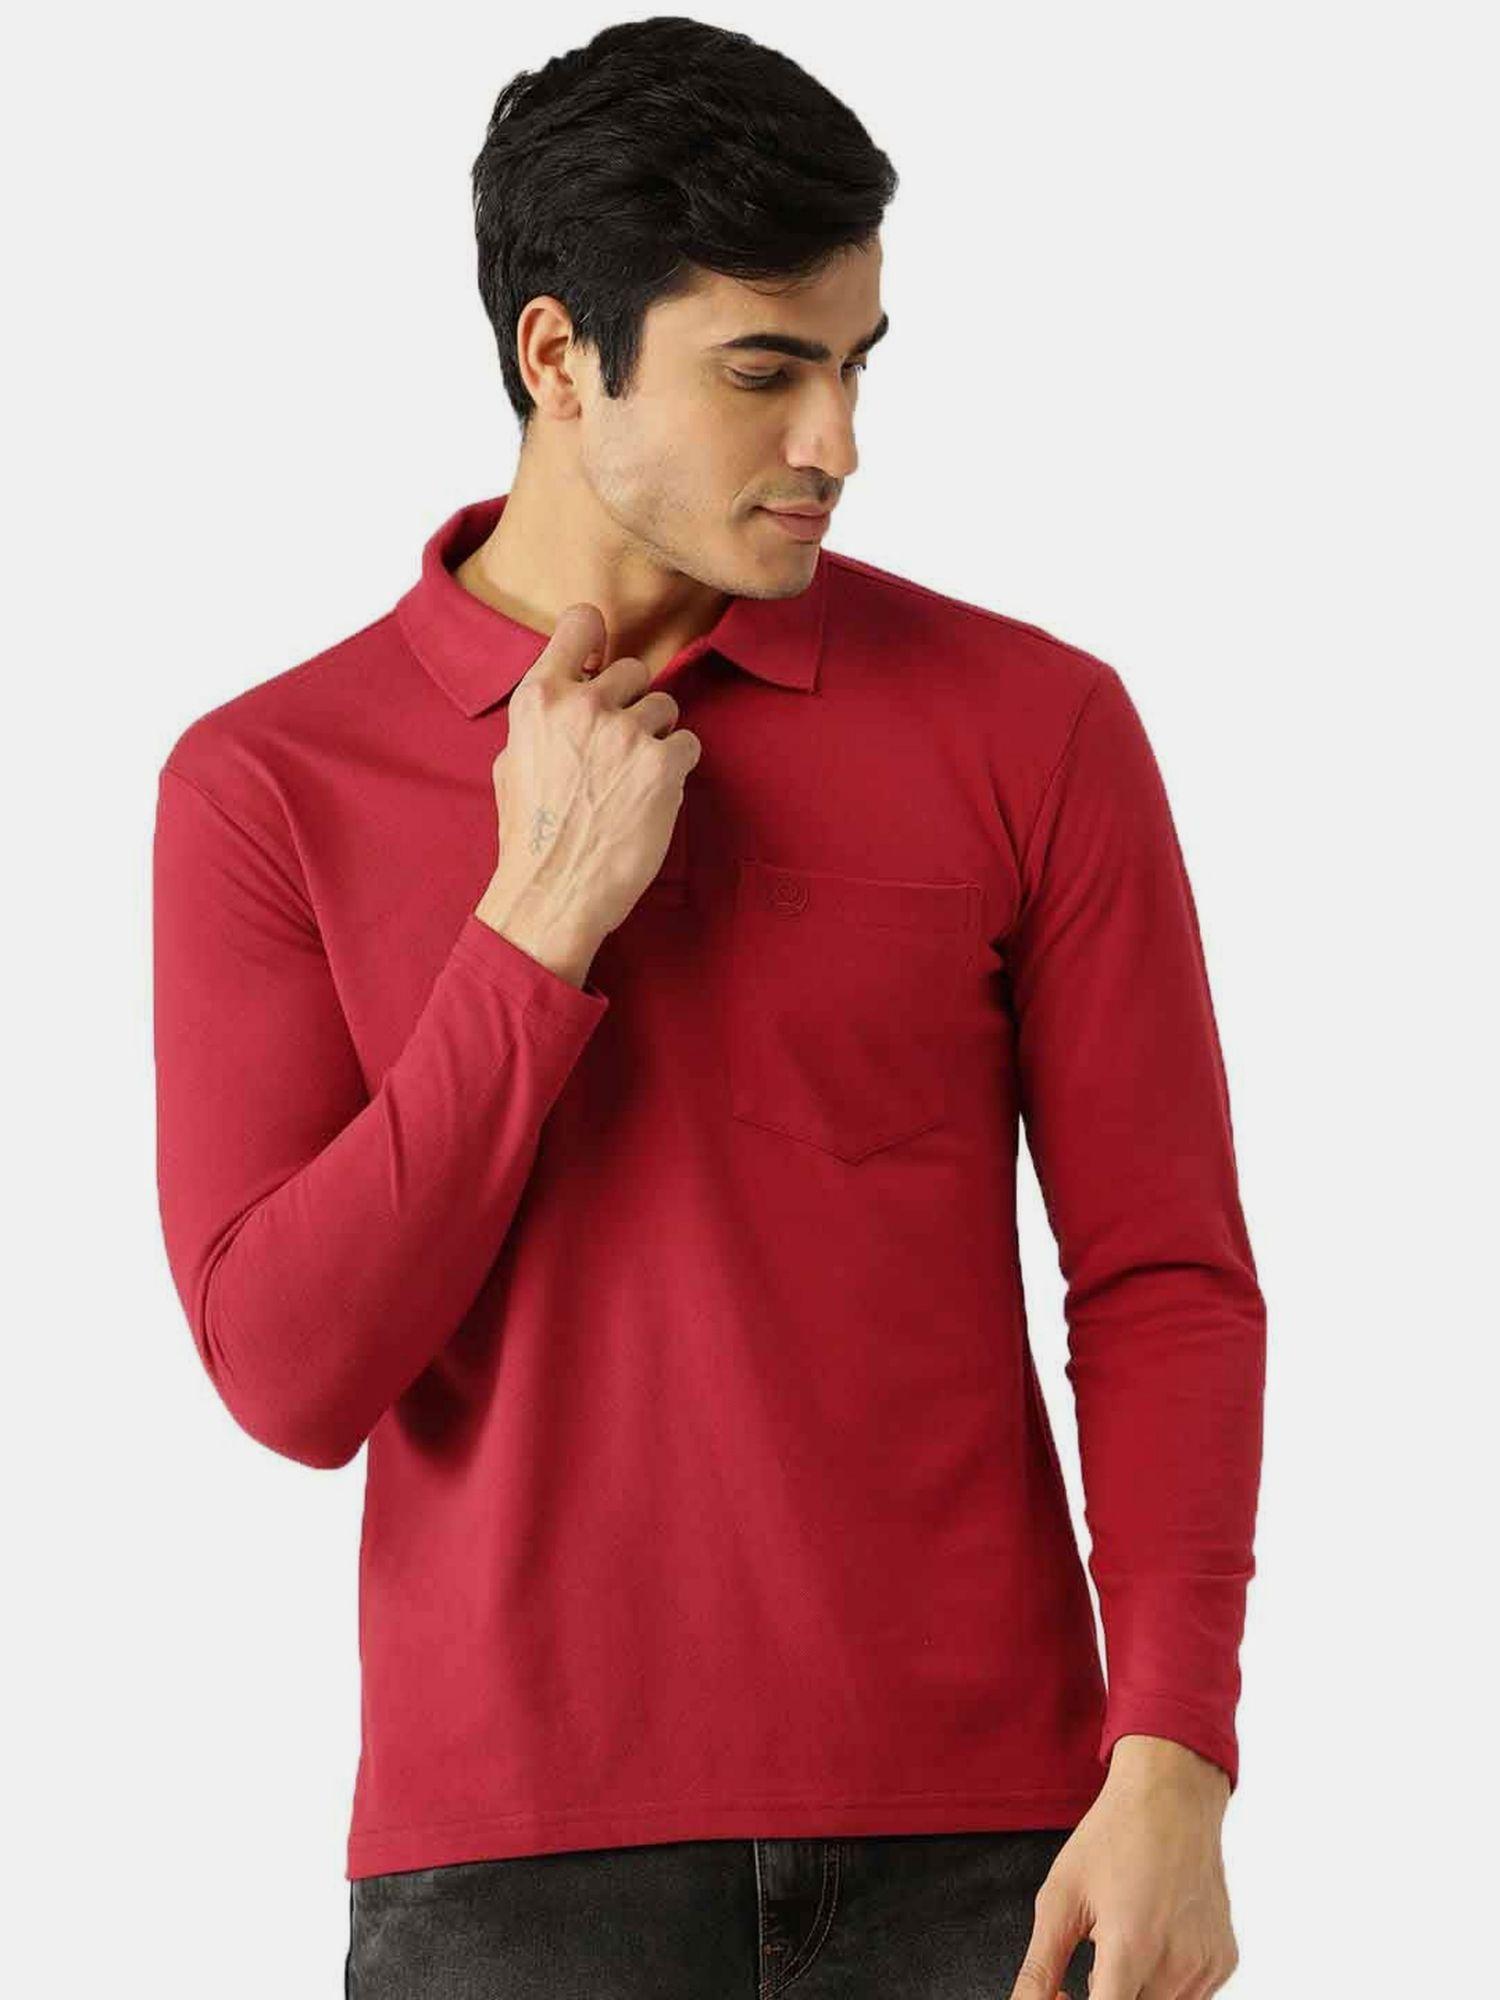 cotton polo neck t shirt for men